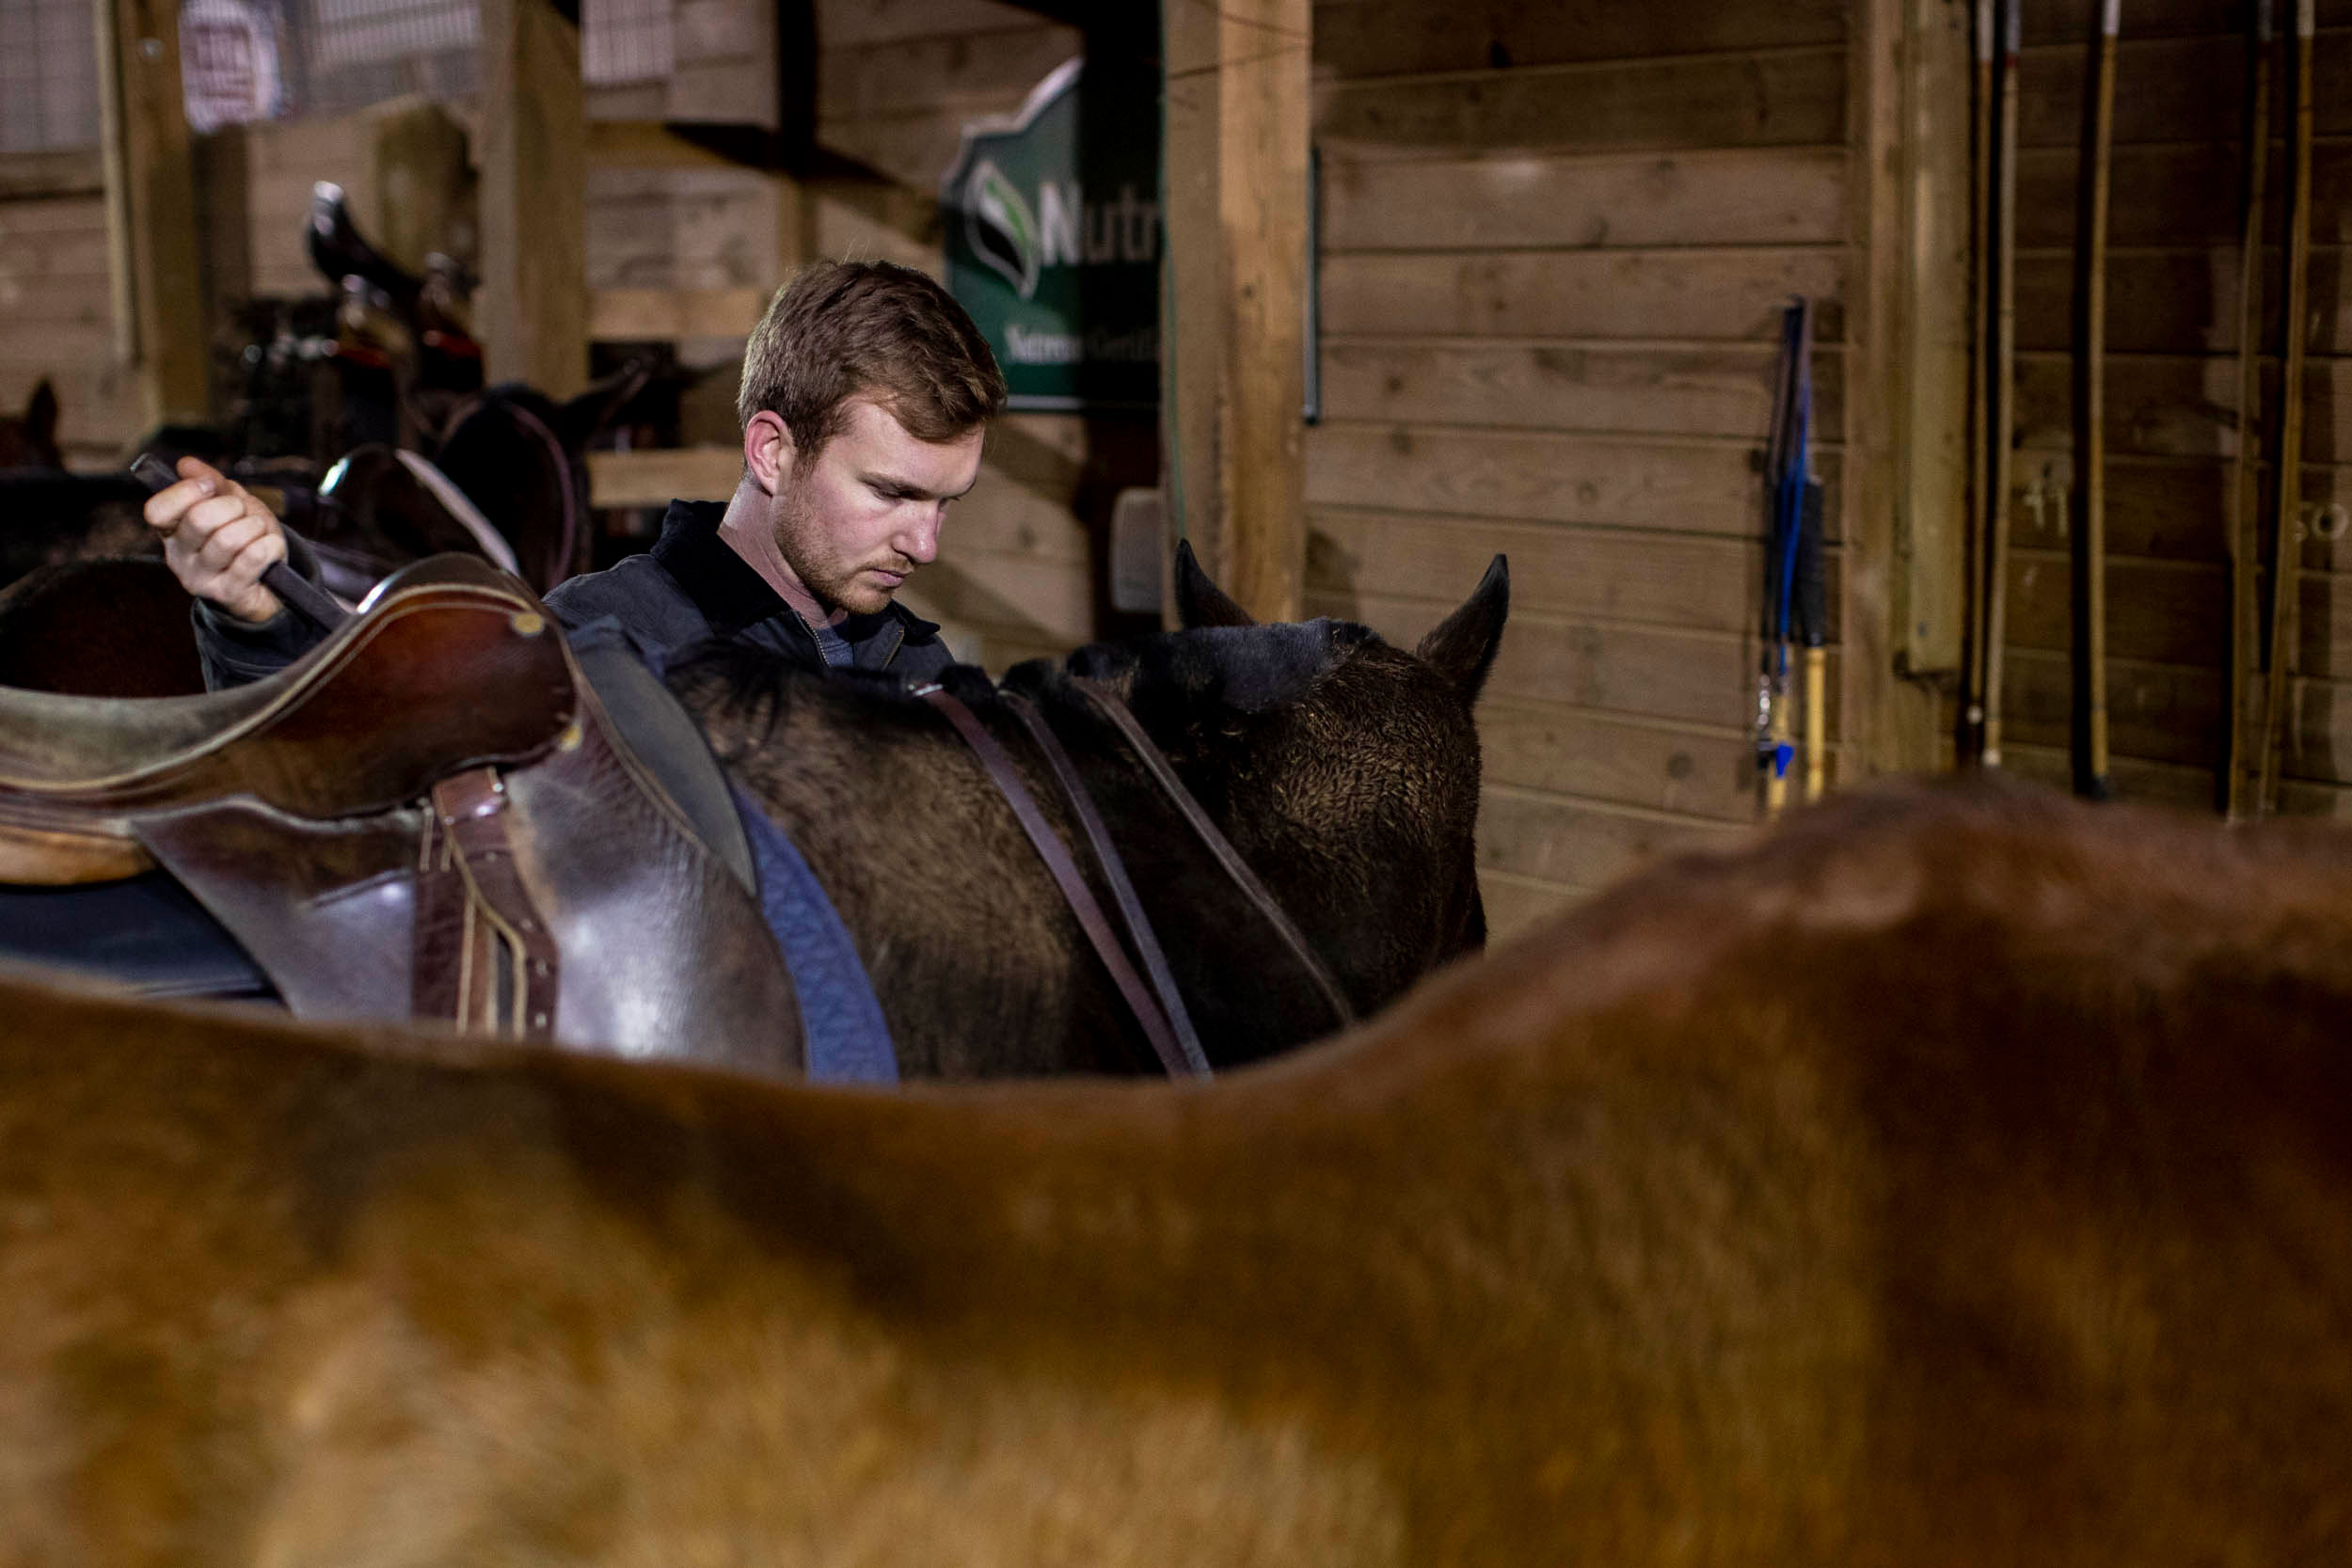 Jake Kausen taking care of a horse